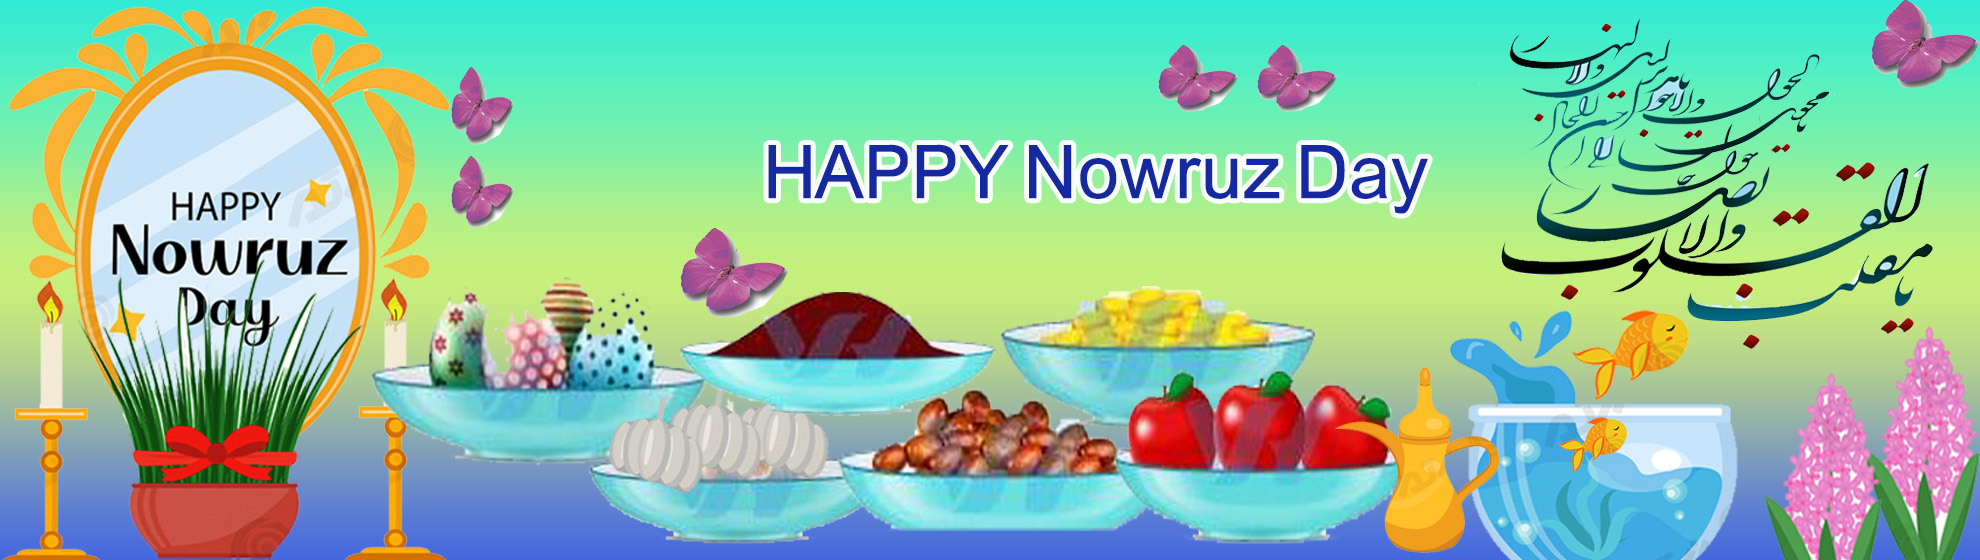 happy nowruz day